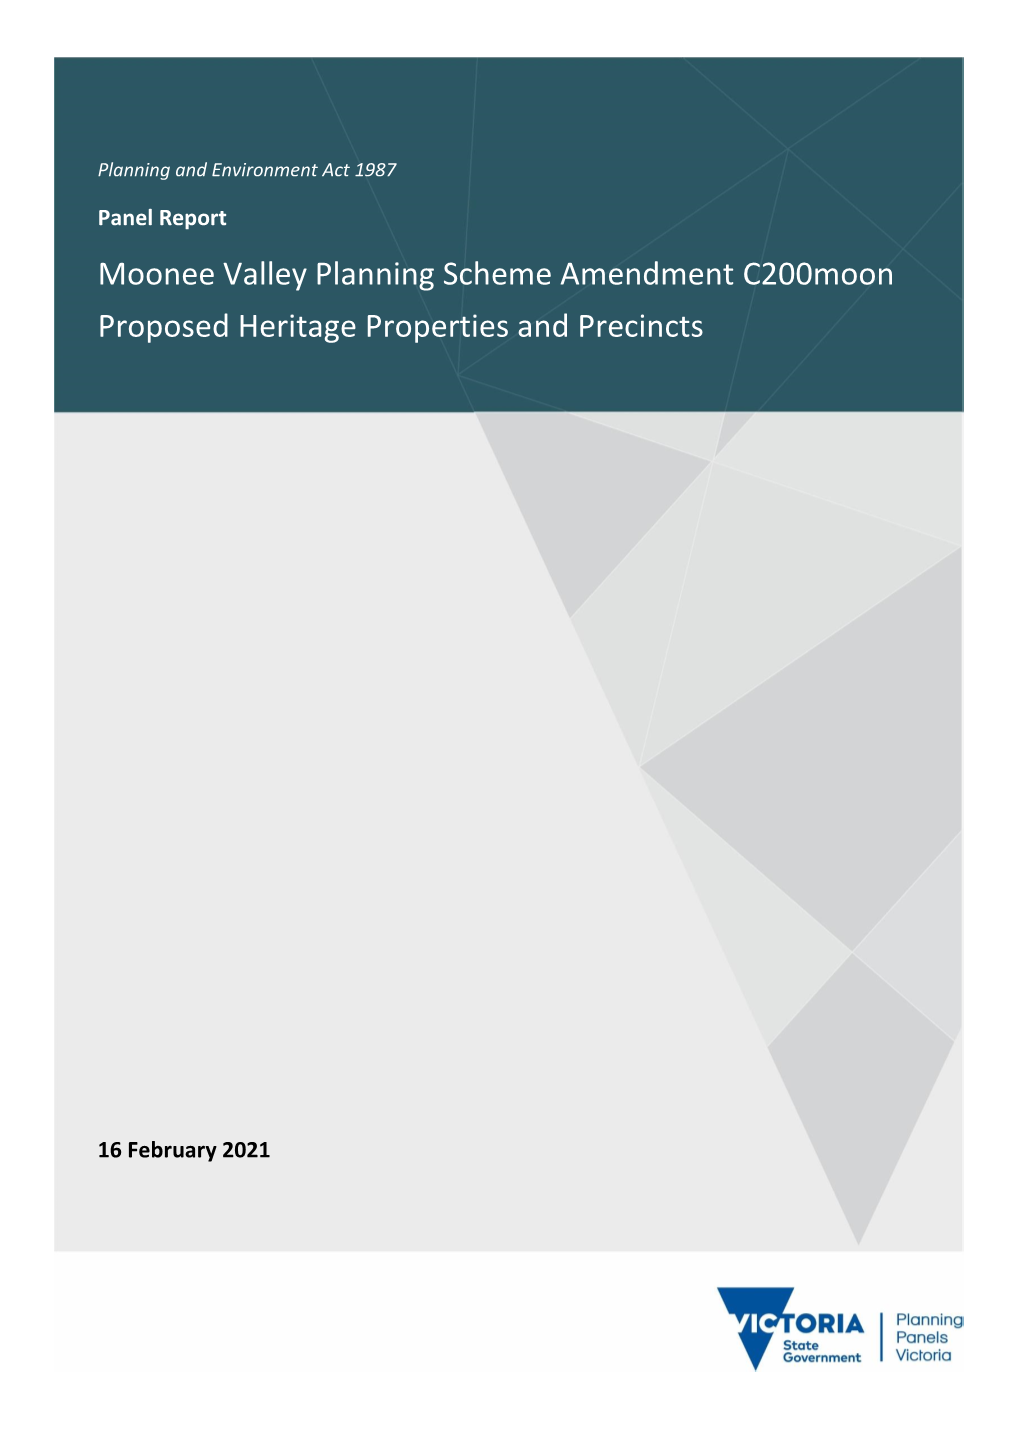 Moonee Valley Planning Scheme Amendment C200moon Proposed Heritage Properties and Precincts